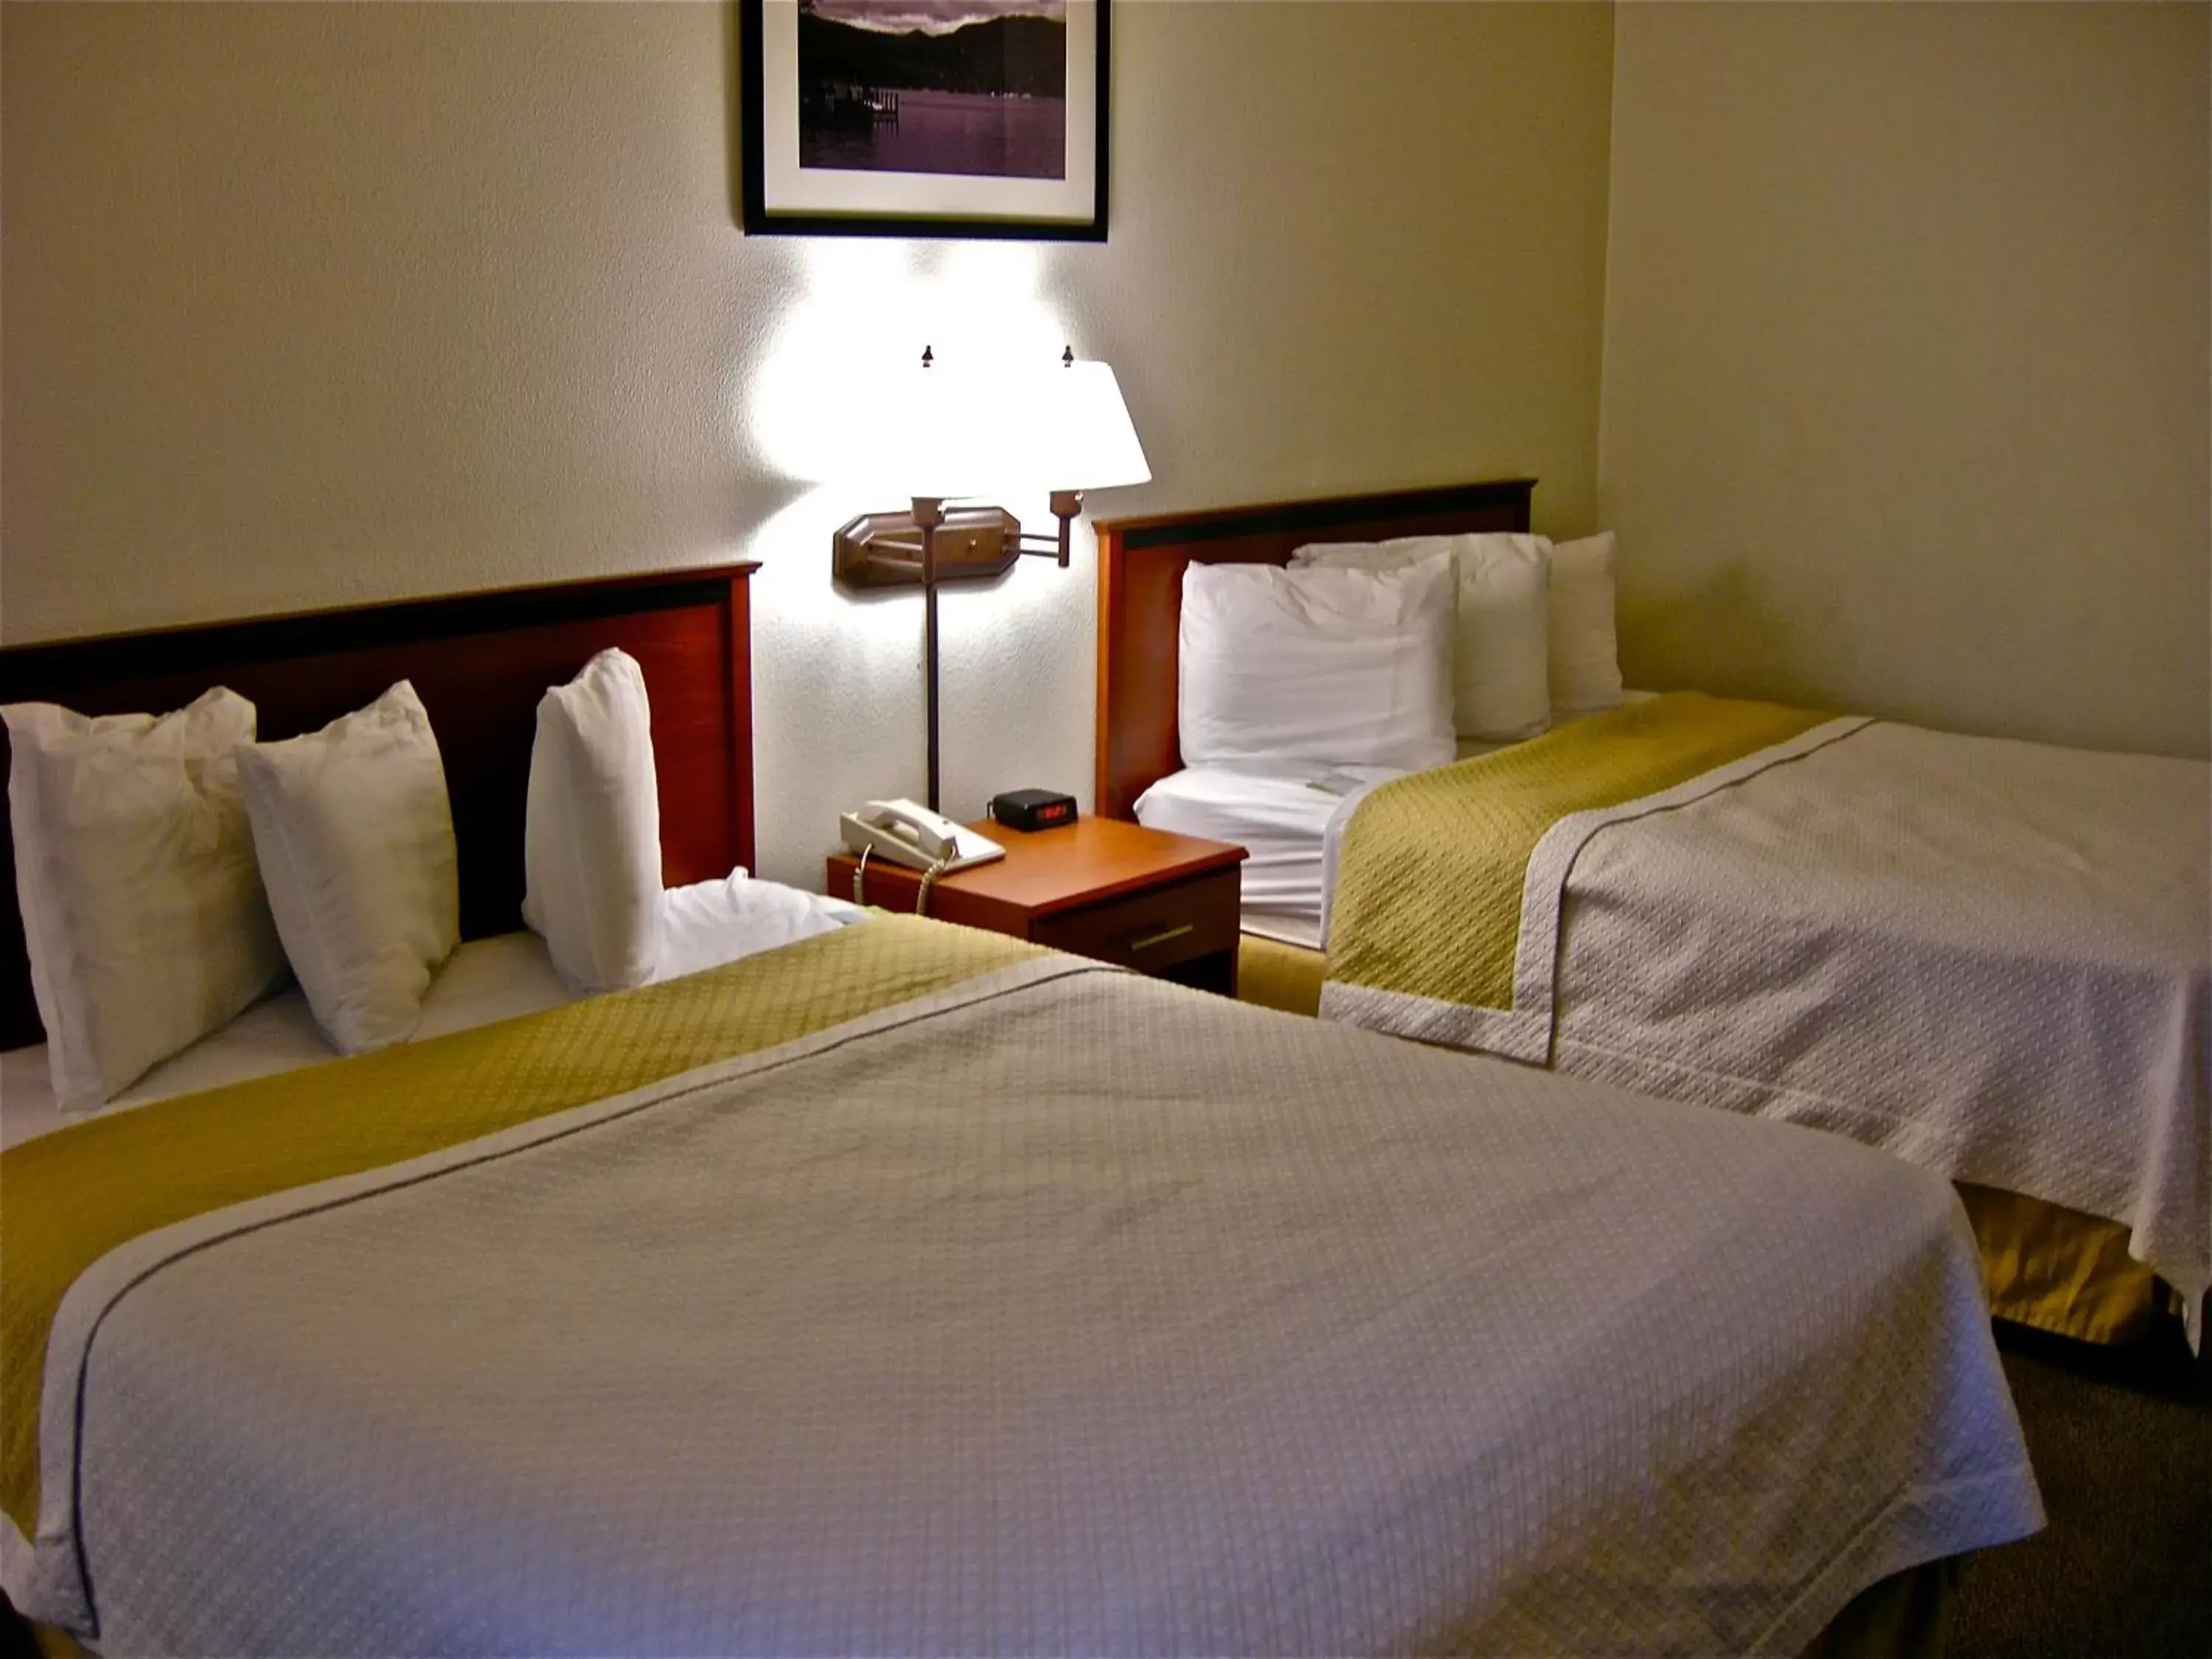 Bedroom, Bed in Days Inn by Wyndham Coeur d'Alene